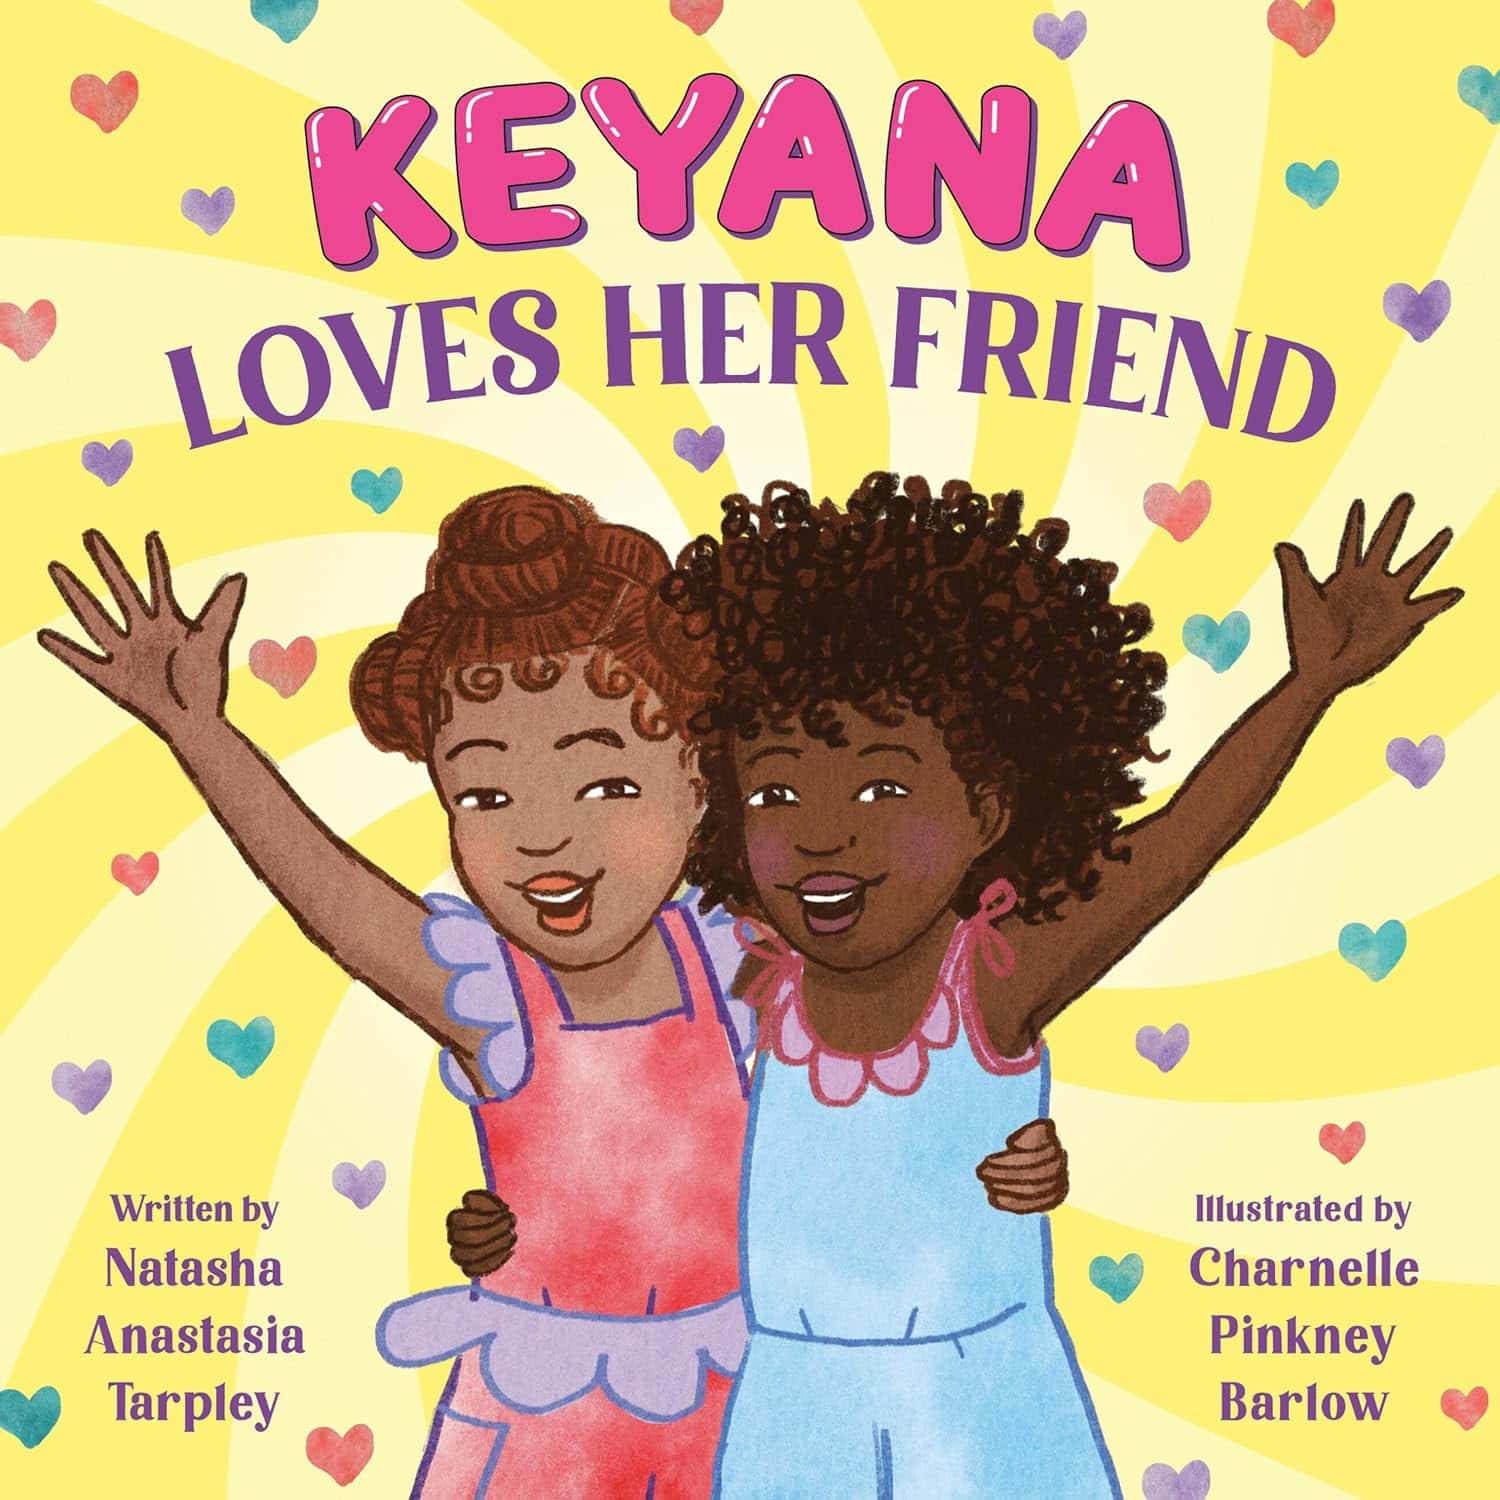 "Keyana Loves Her Friend" by Natasha Anastasia Tarpley